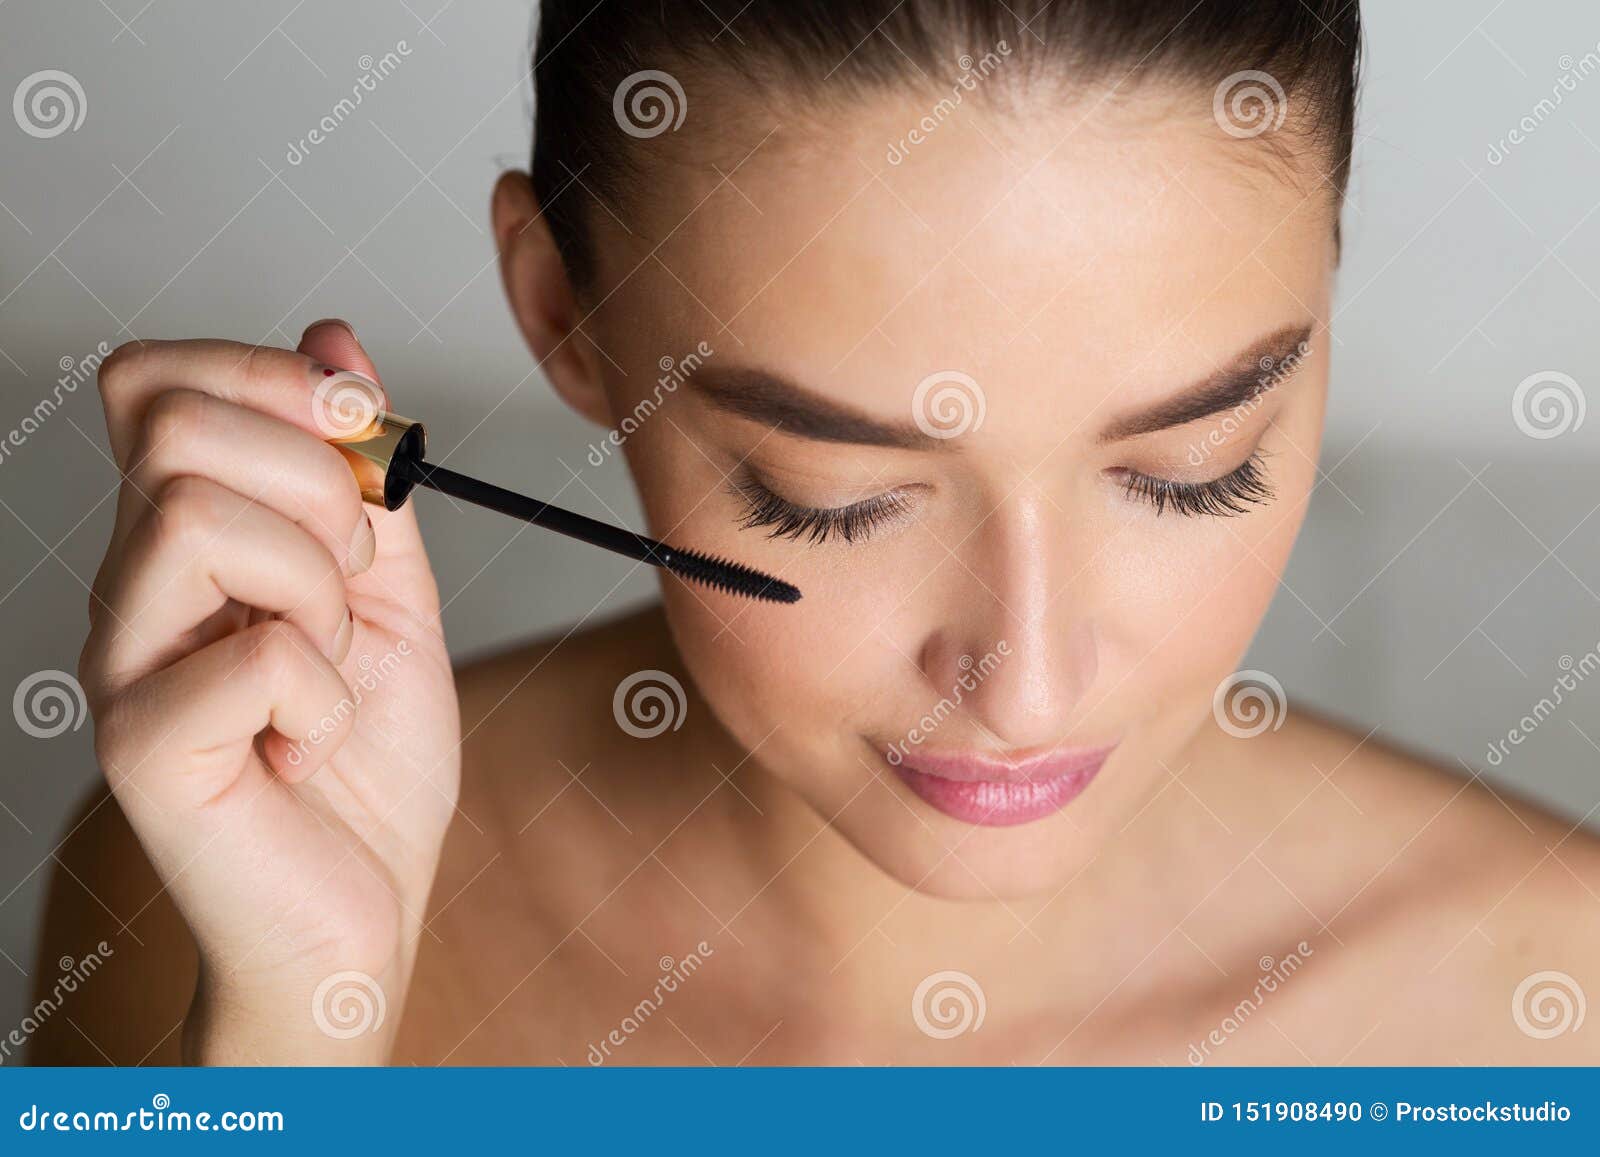 doing makeup. woman applying mascara on eyelashes